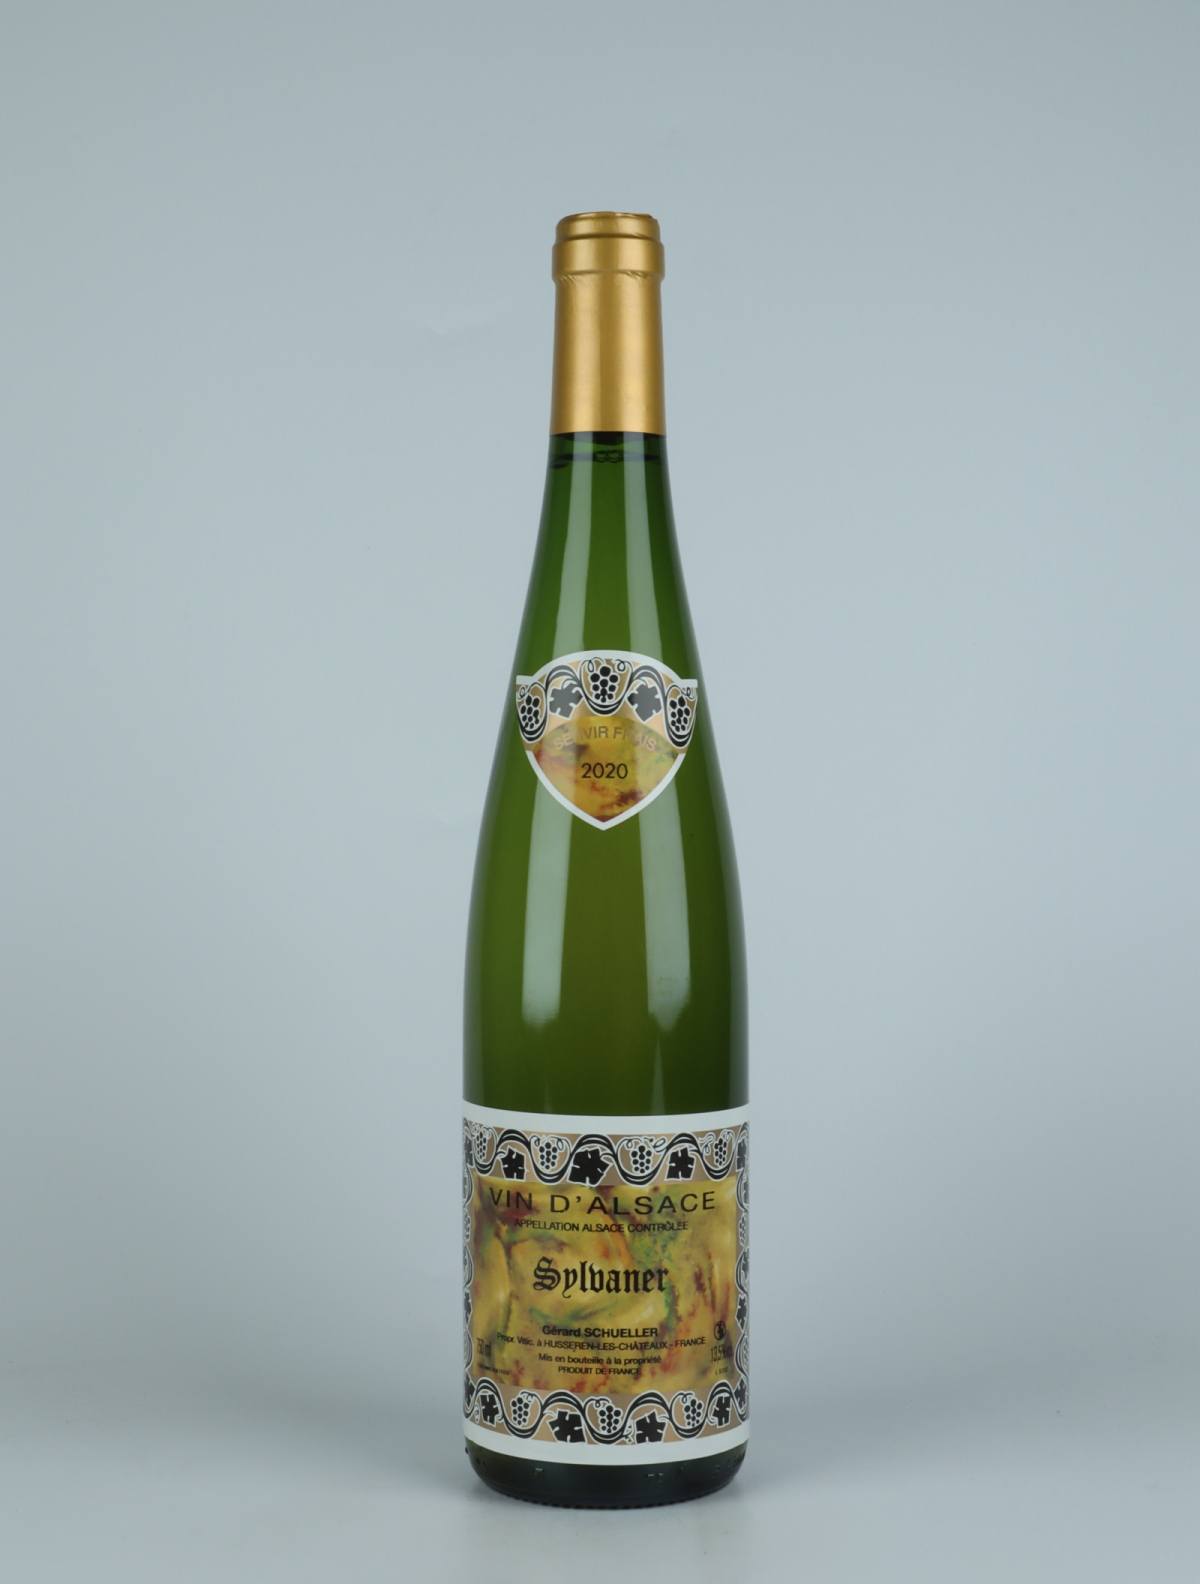 A bottle 2020 Sylvaner White wine from Gérard Schueller, Alsace in France